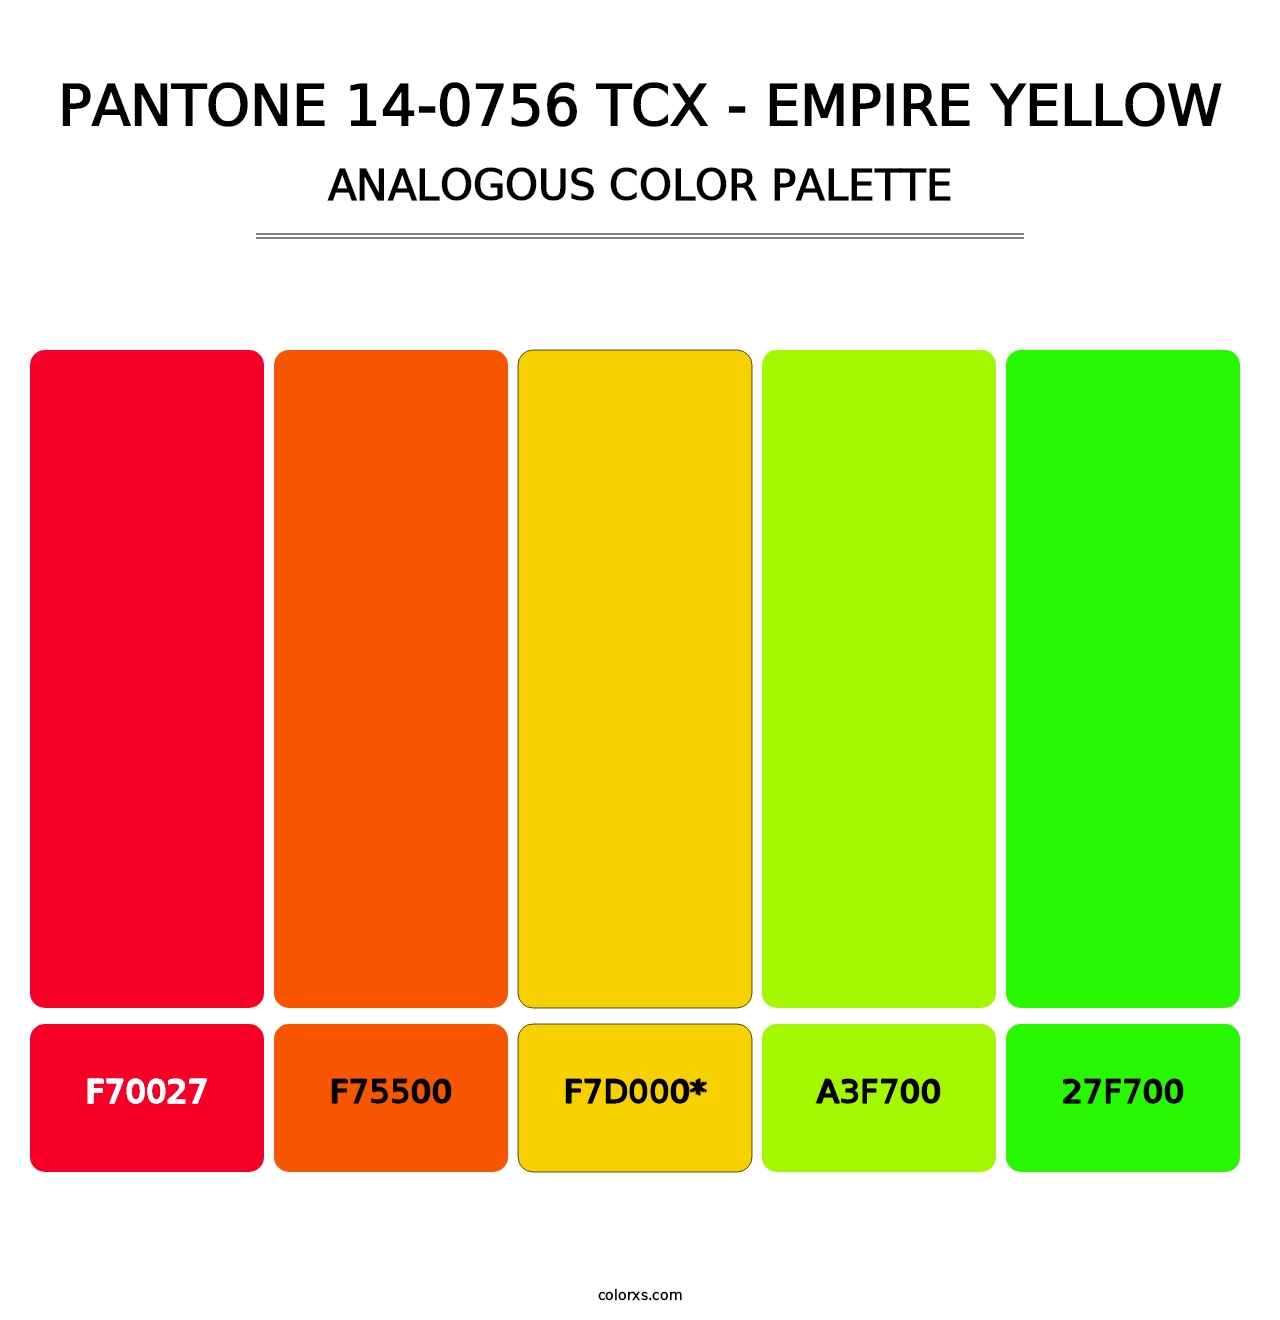 PANTONE 14-0756 TCX - Empire Yellow - Analogous Color Palette